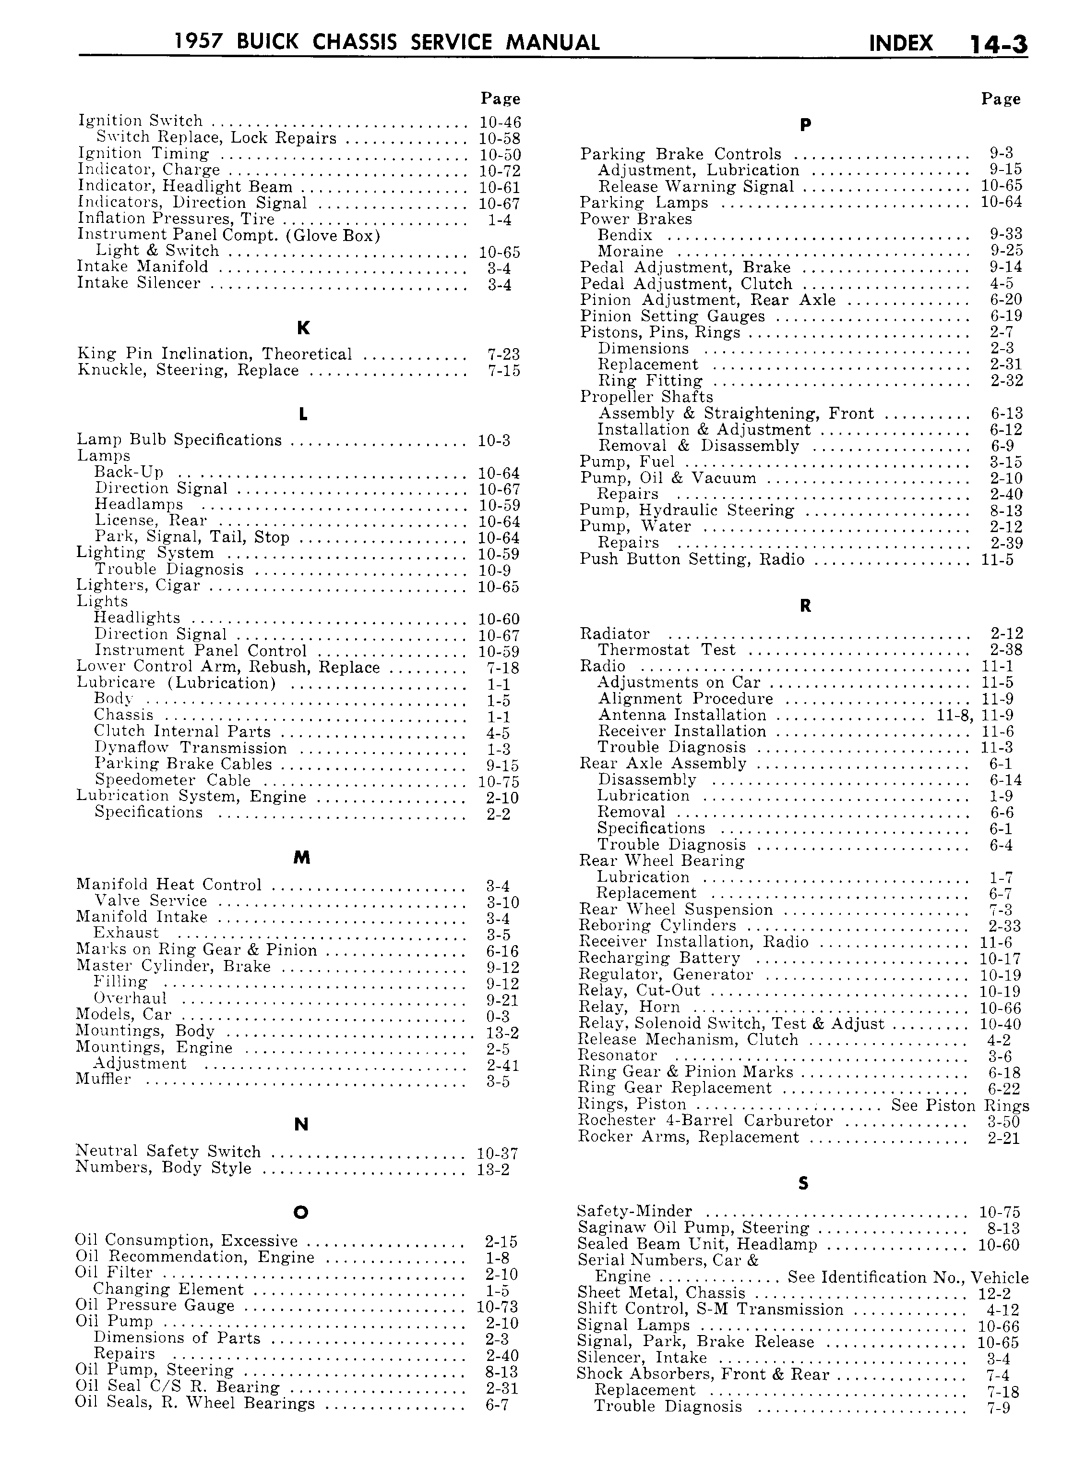 n_14 1957 Buick Shop Manual - Index-003-003.jpg